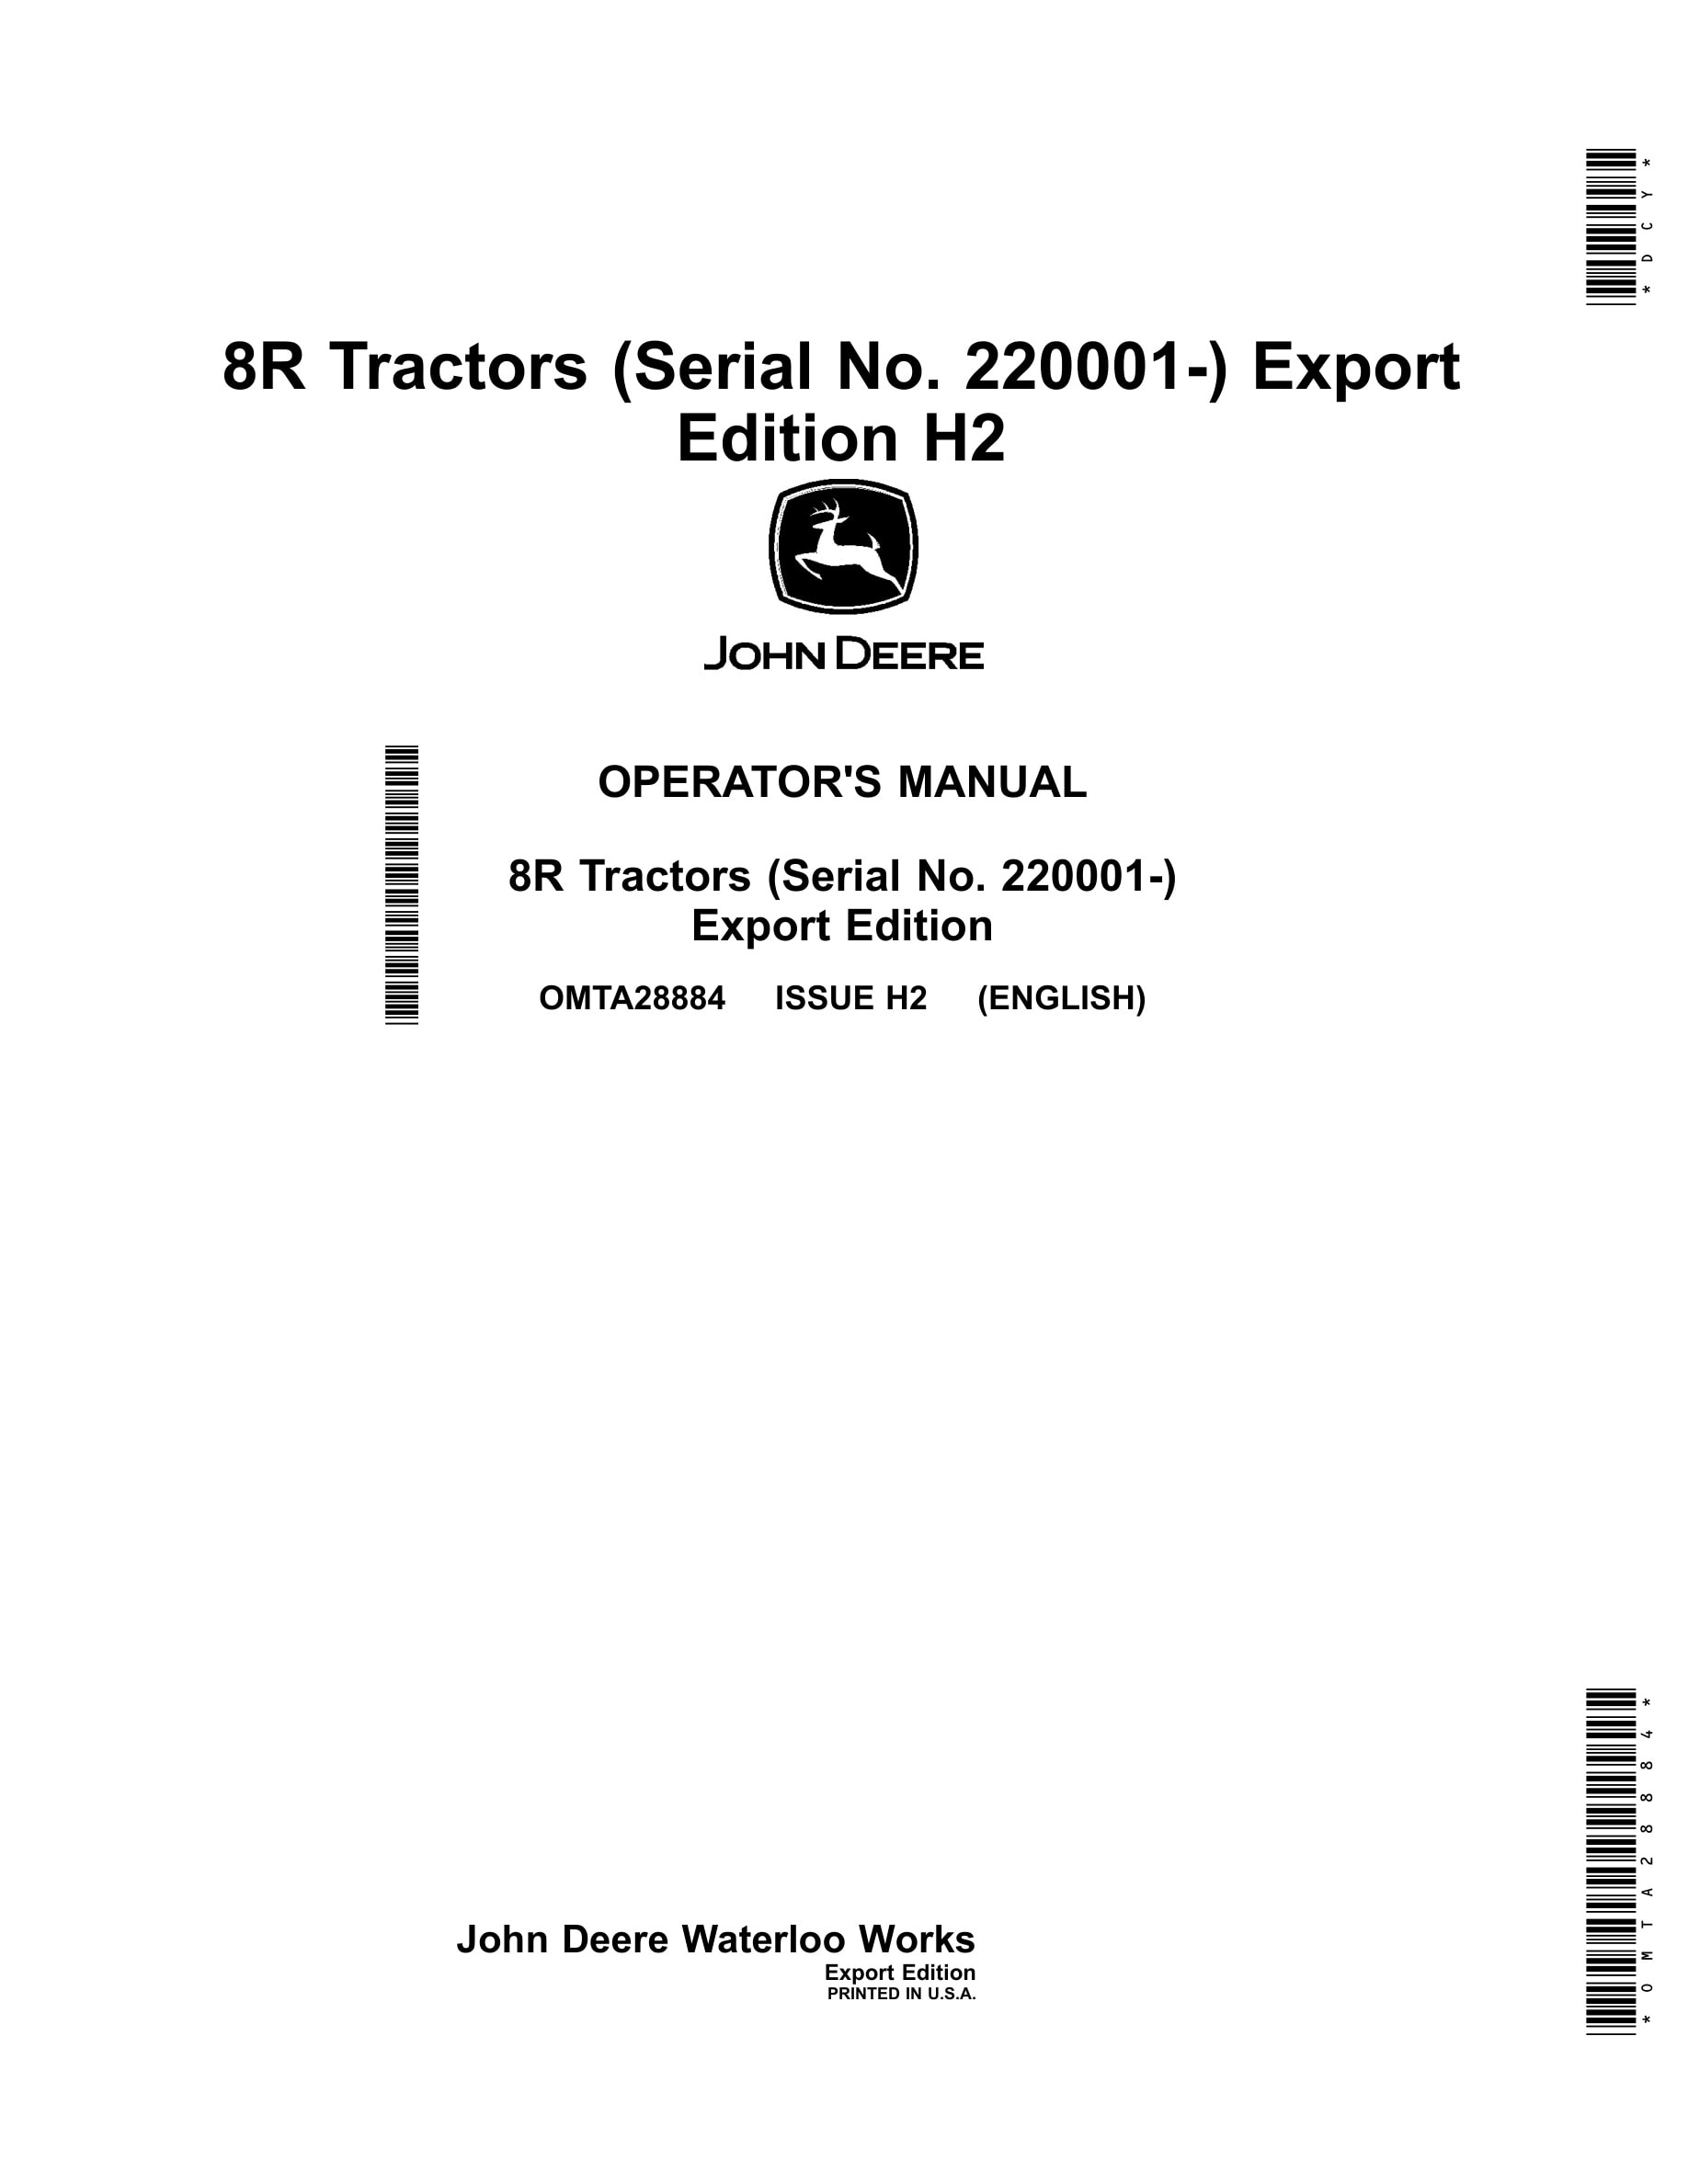 John Deere 8r Tractors Operator Manuals OMTA28884-1